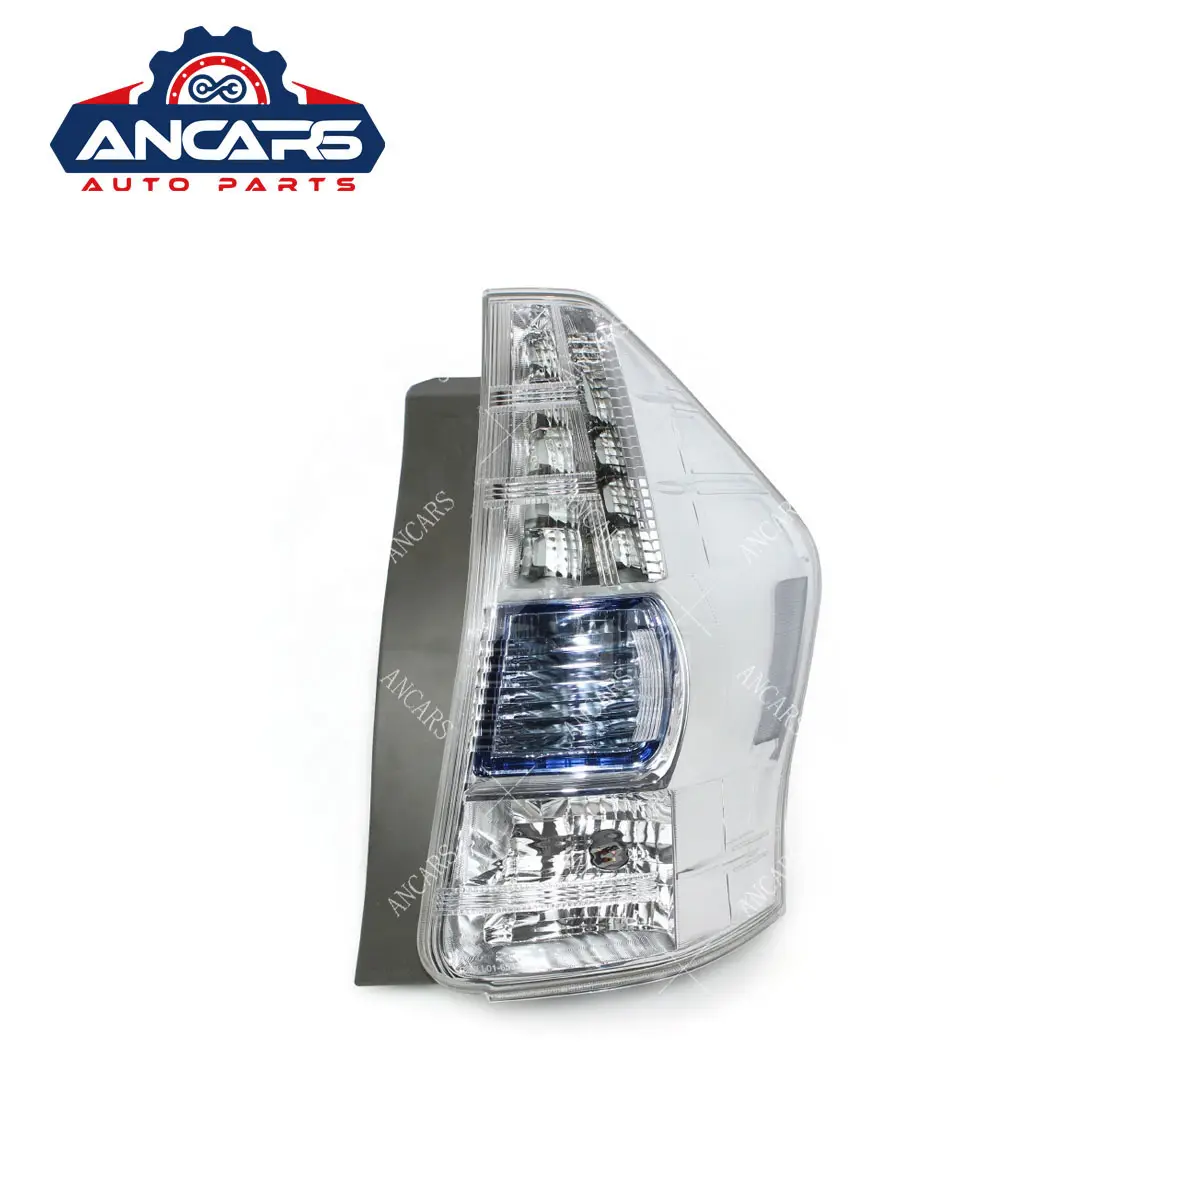 Auto Parts Car Light Prius Tail light 81560-47140 For Prius Alpha 2011 Tail Lamp